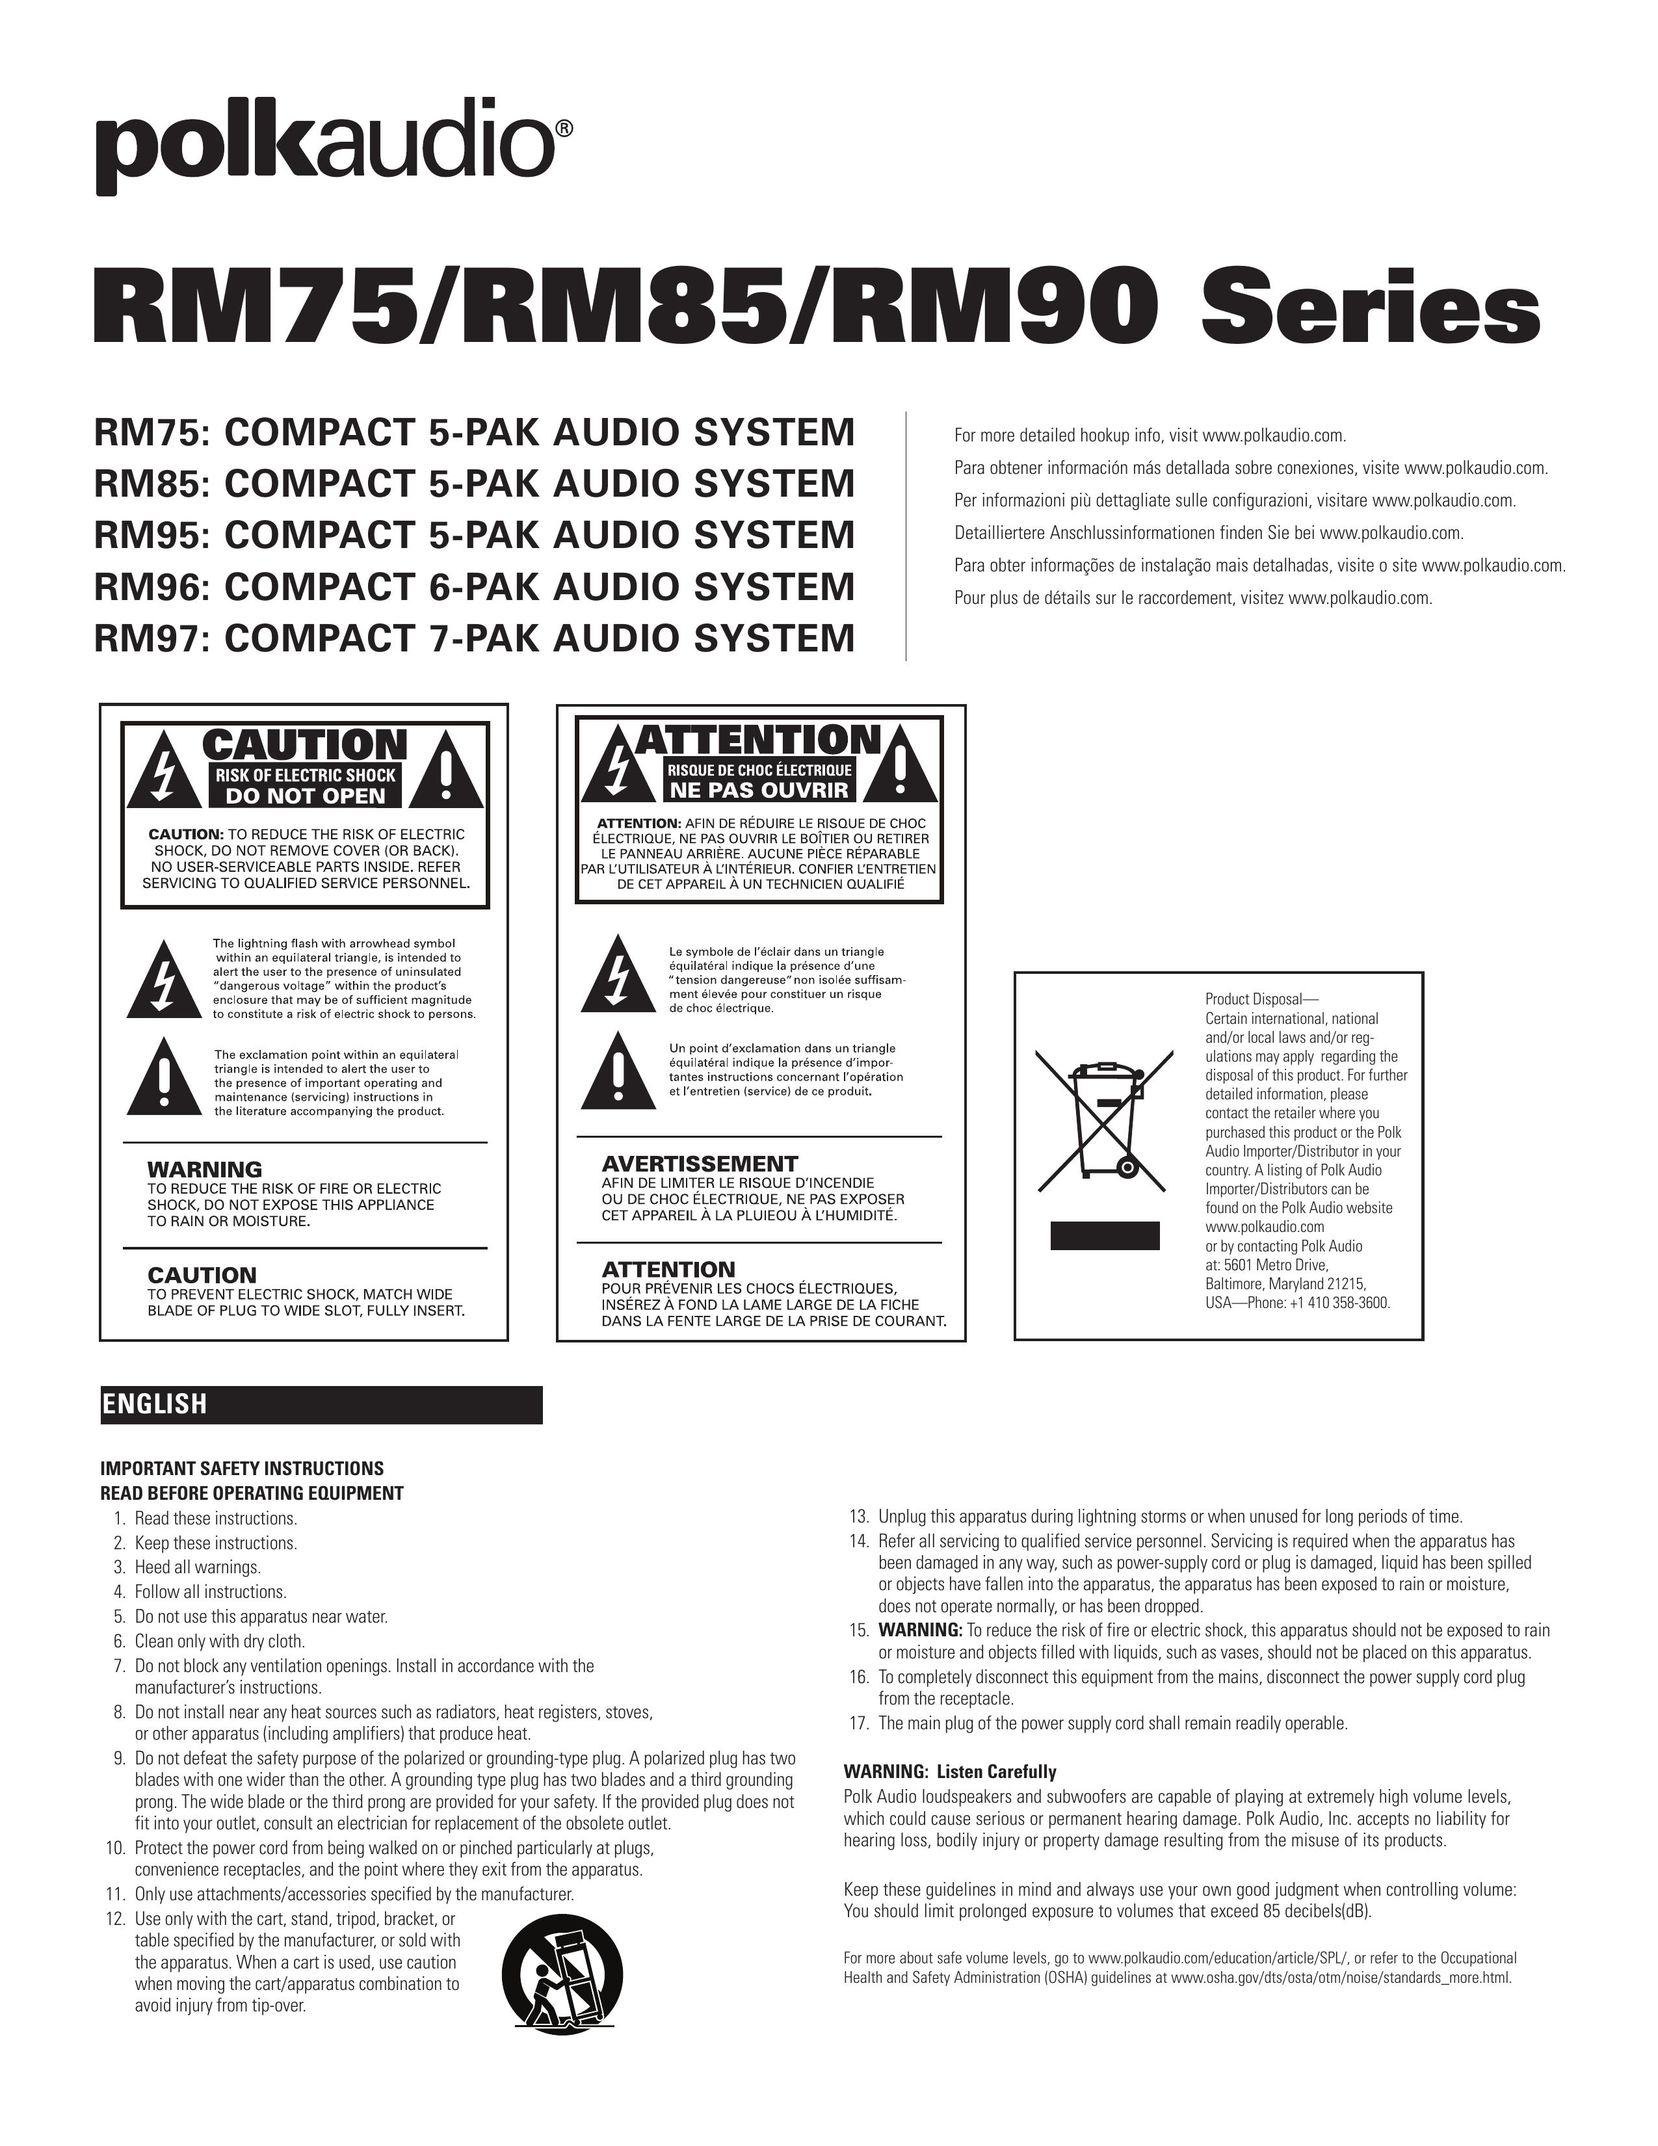 Polk Audio RM75 Stereo System User Manual